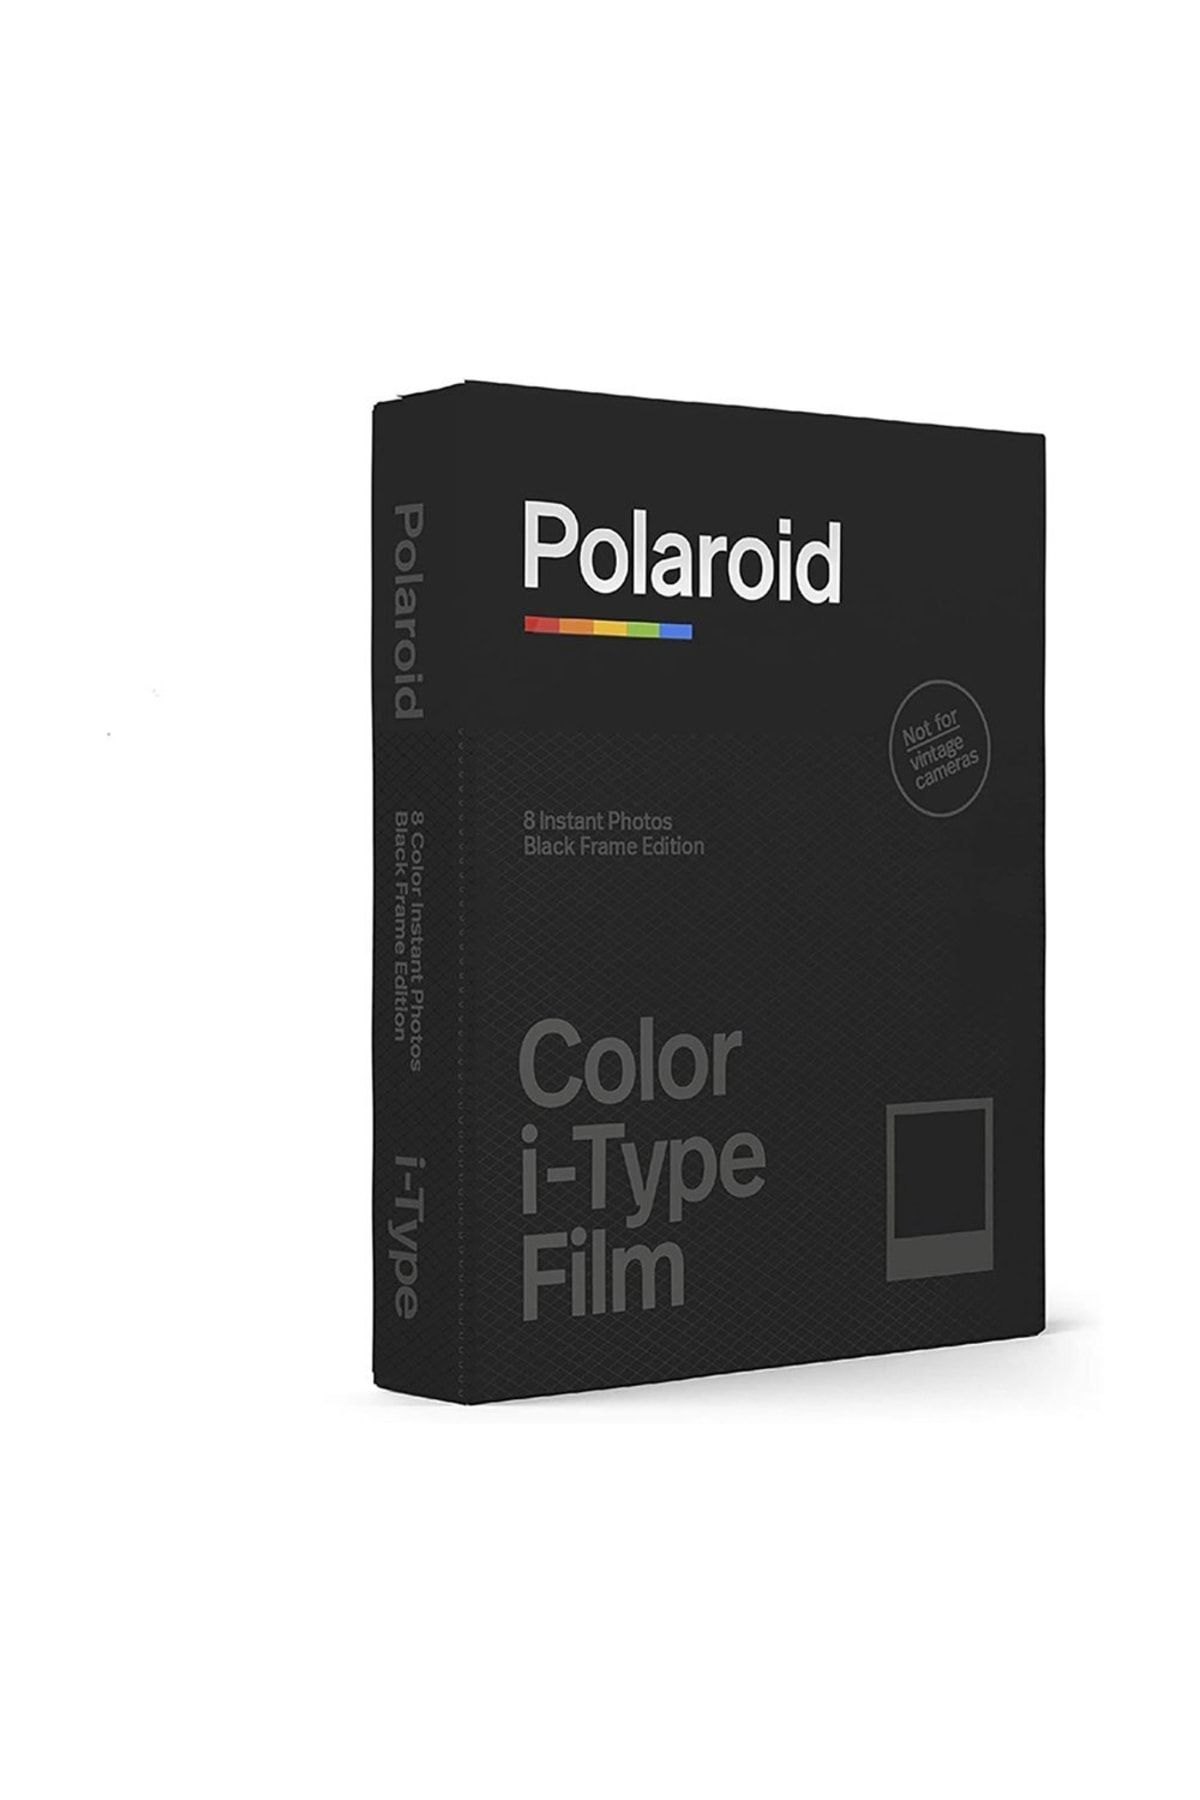 Polaroid Color Film For I-type – Black Frame Edition